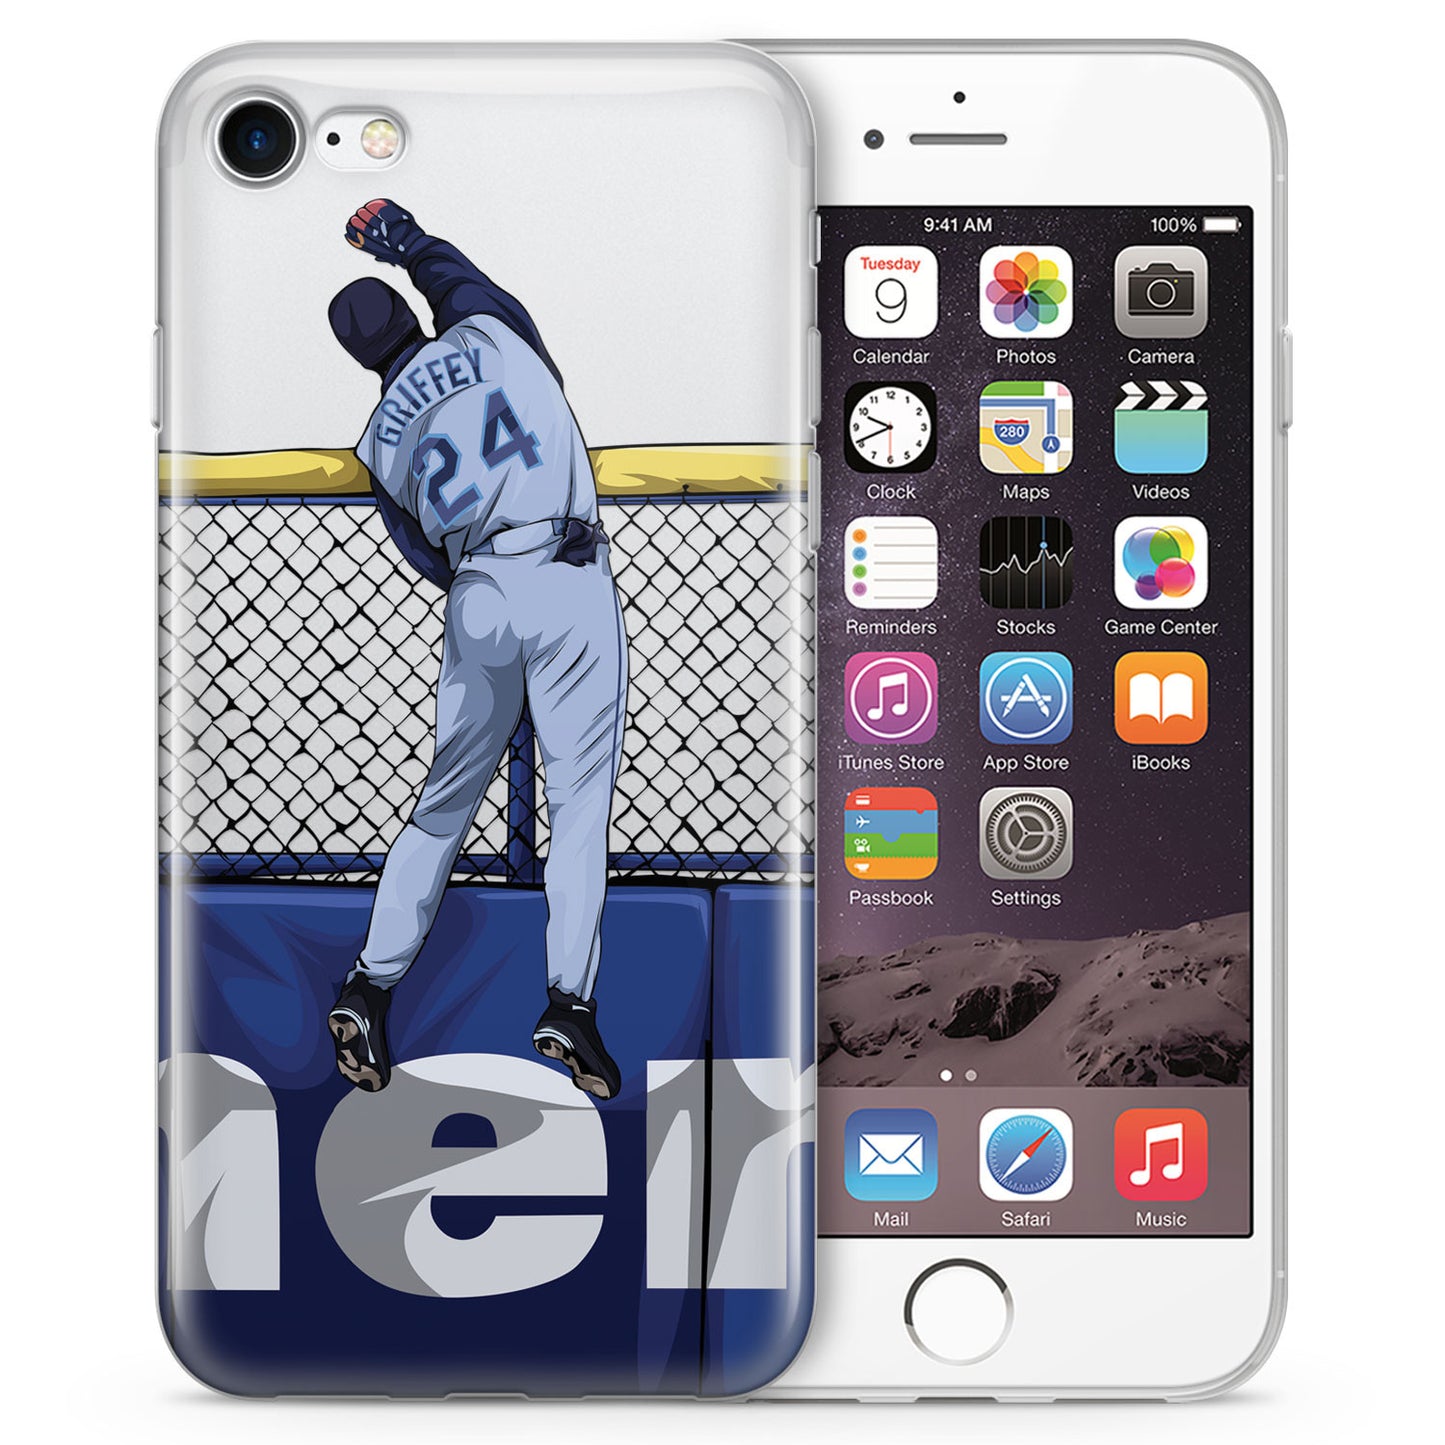 Junior Baseball iPhone Case